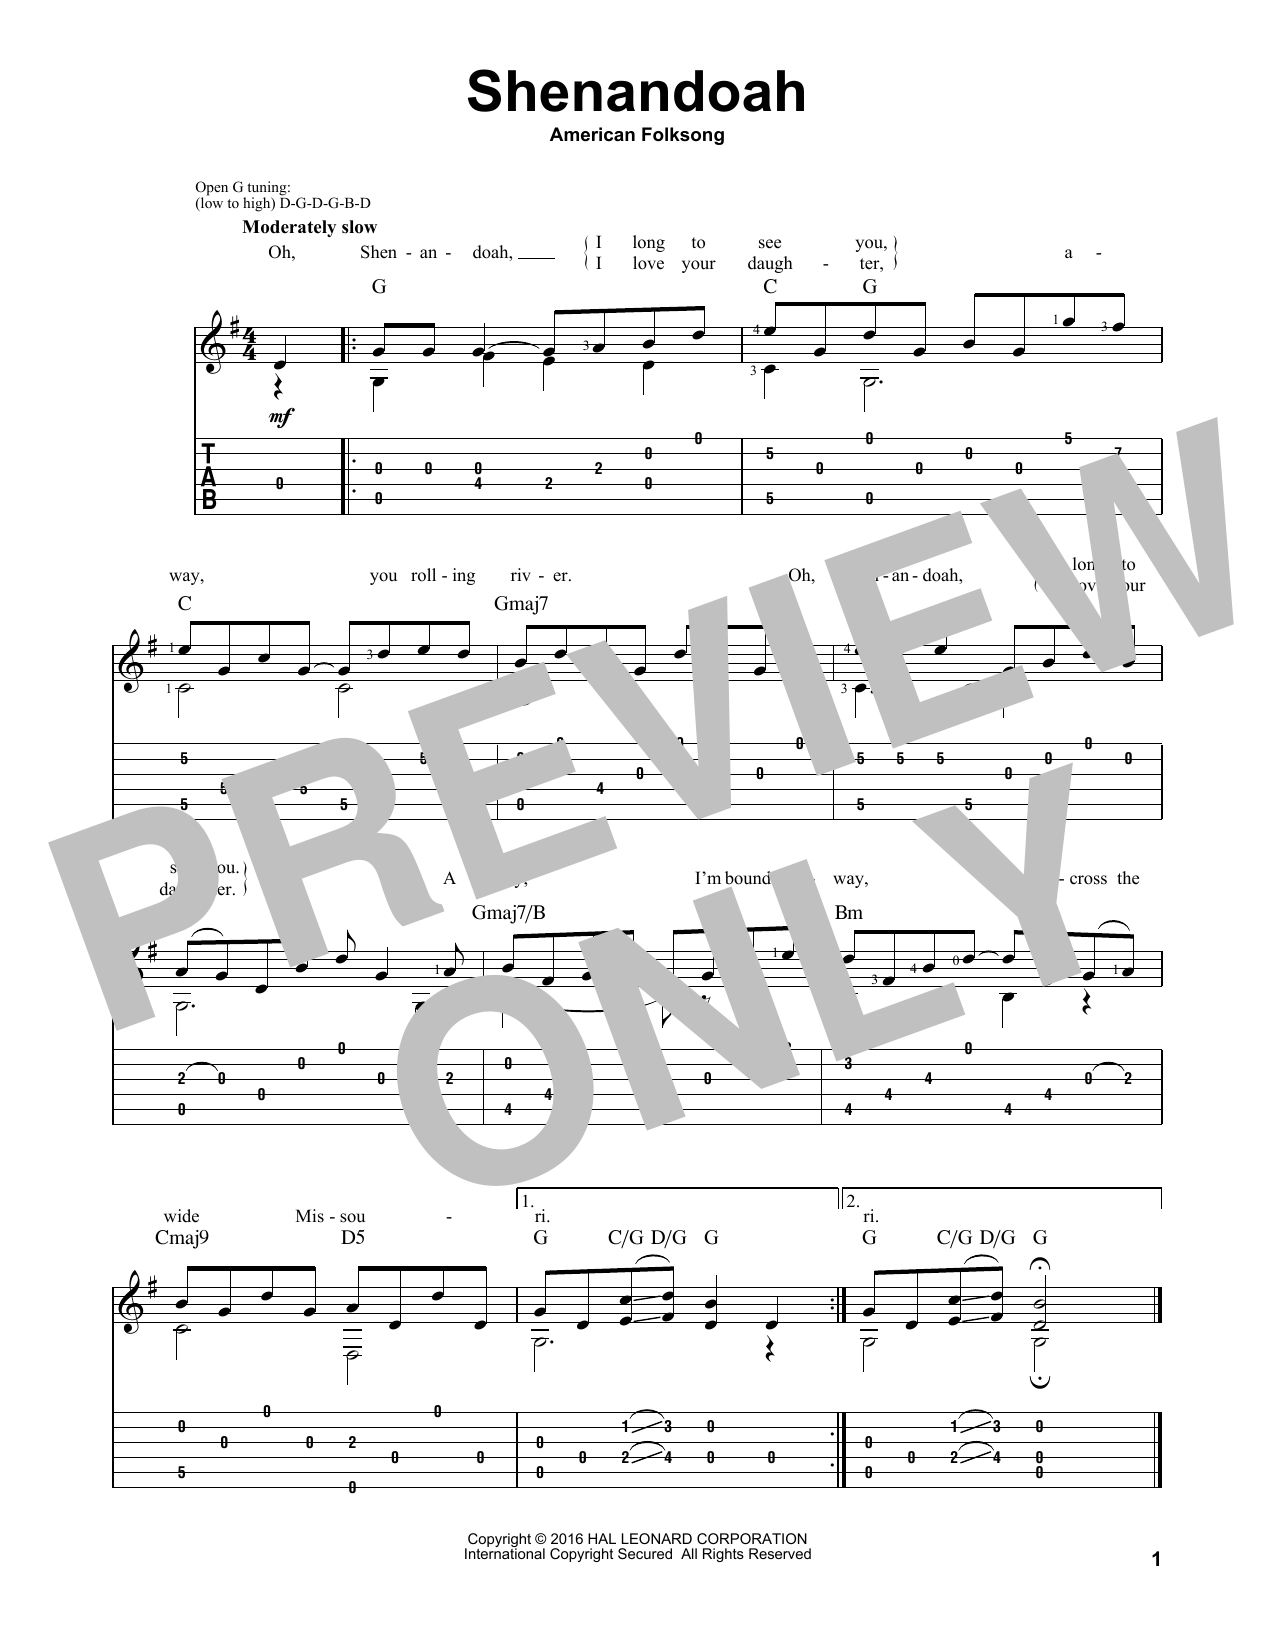 Mark Phillips Shenandoah Sheet Music Notes & Chords for Guitar Tab - Download or Print PDF